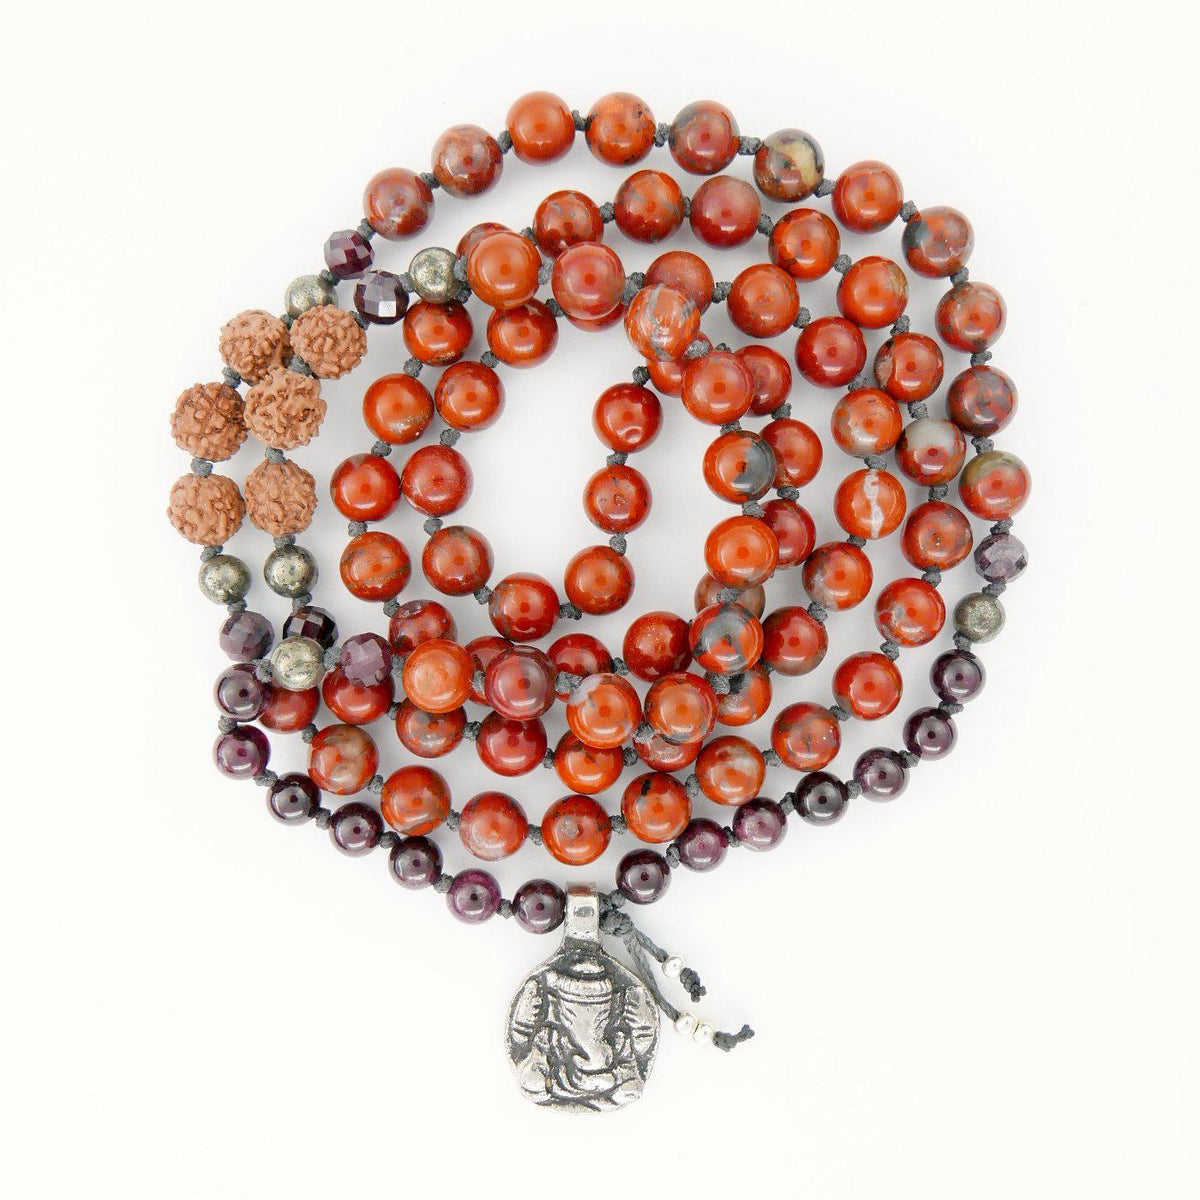 Finished Mala necklace with Ganesh guru bead - MeraKalpa Malas